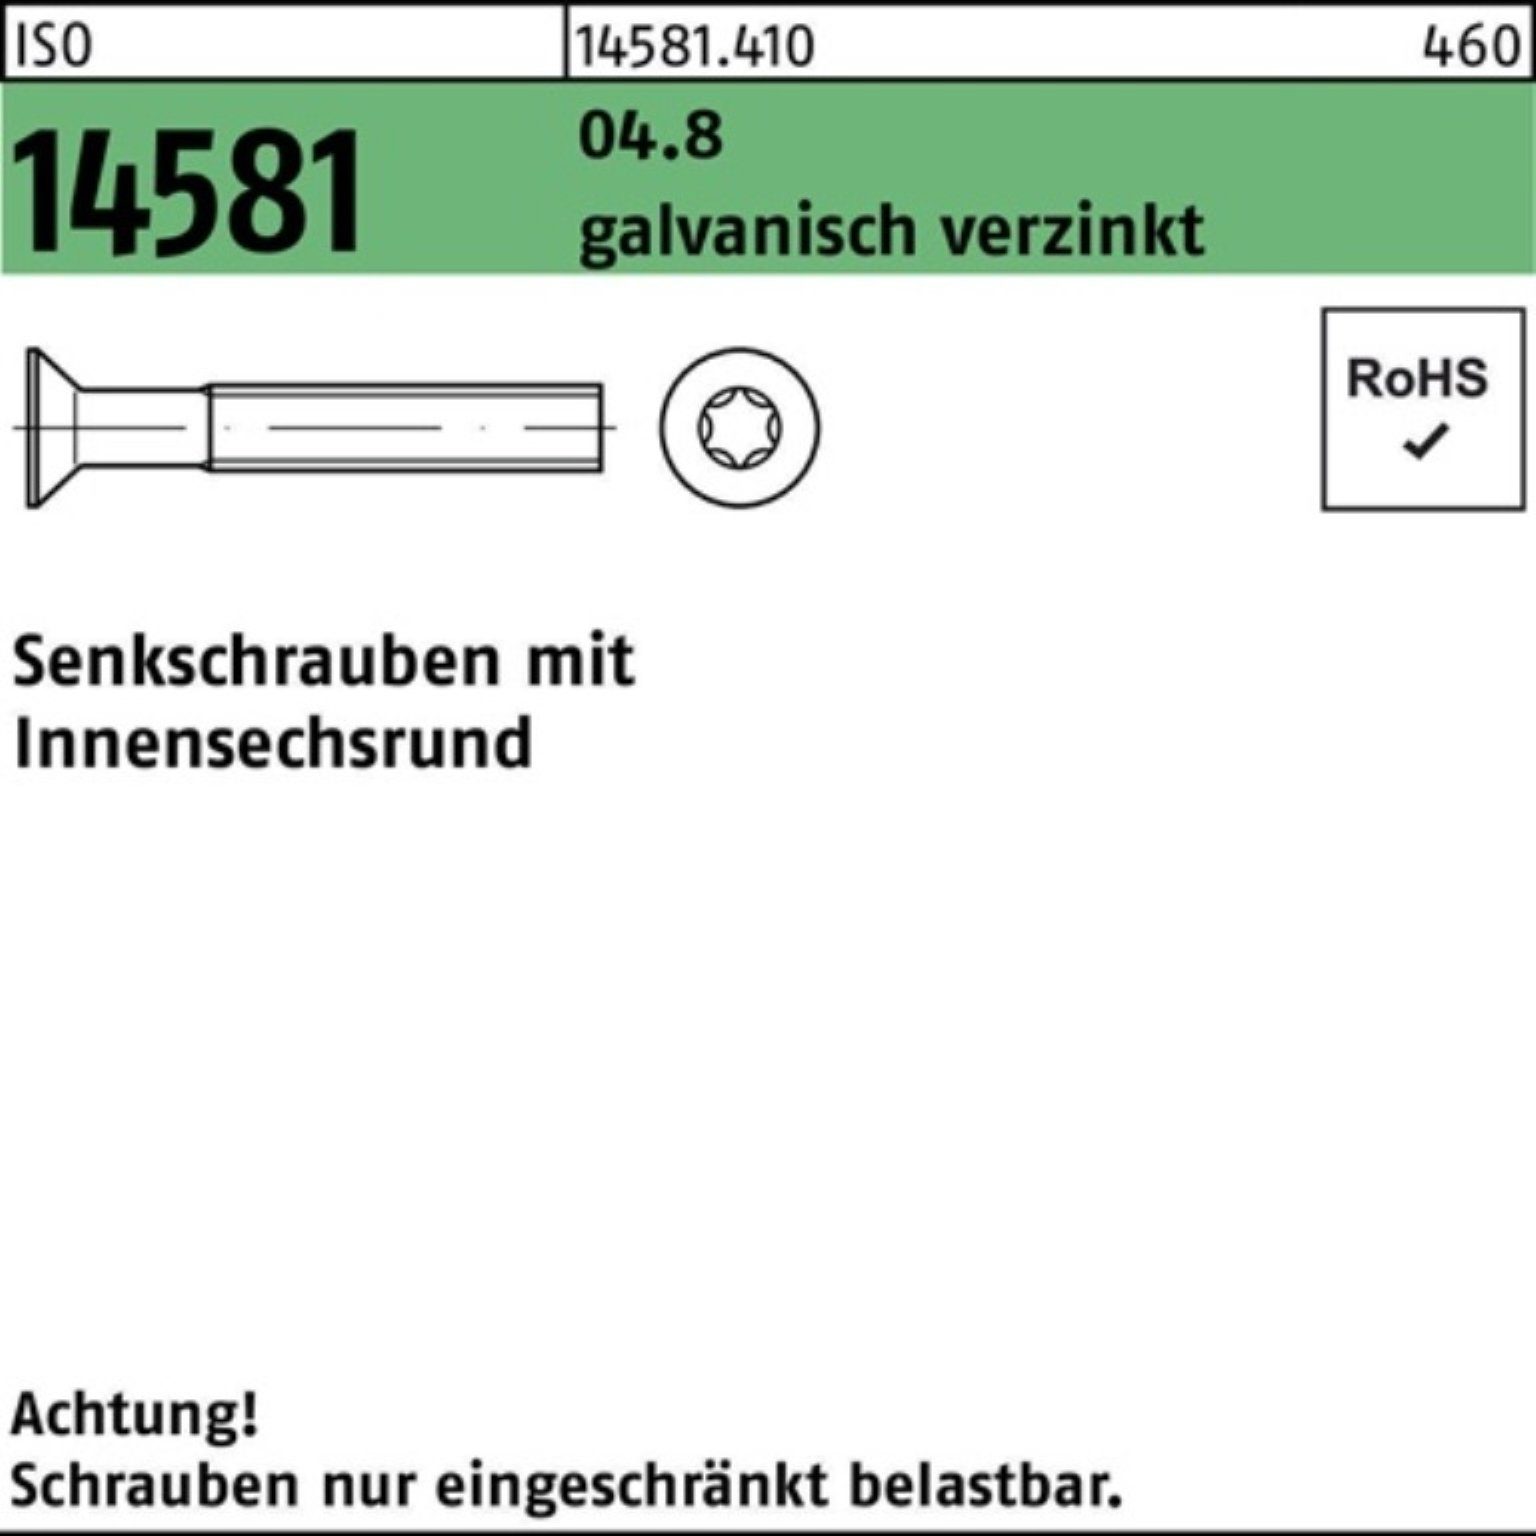 Reyher Senkschraube 1000er Pack Senkschraube ISO 14581 ISR M4x35 T20 04.8 galv.verz. 1000S